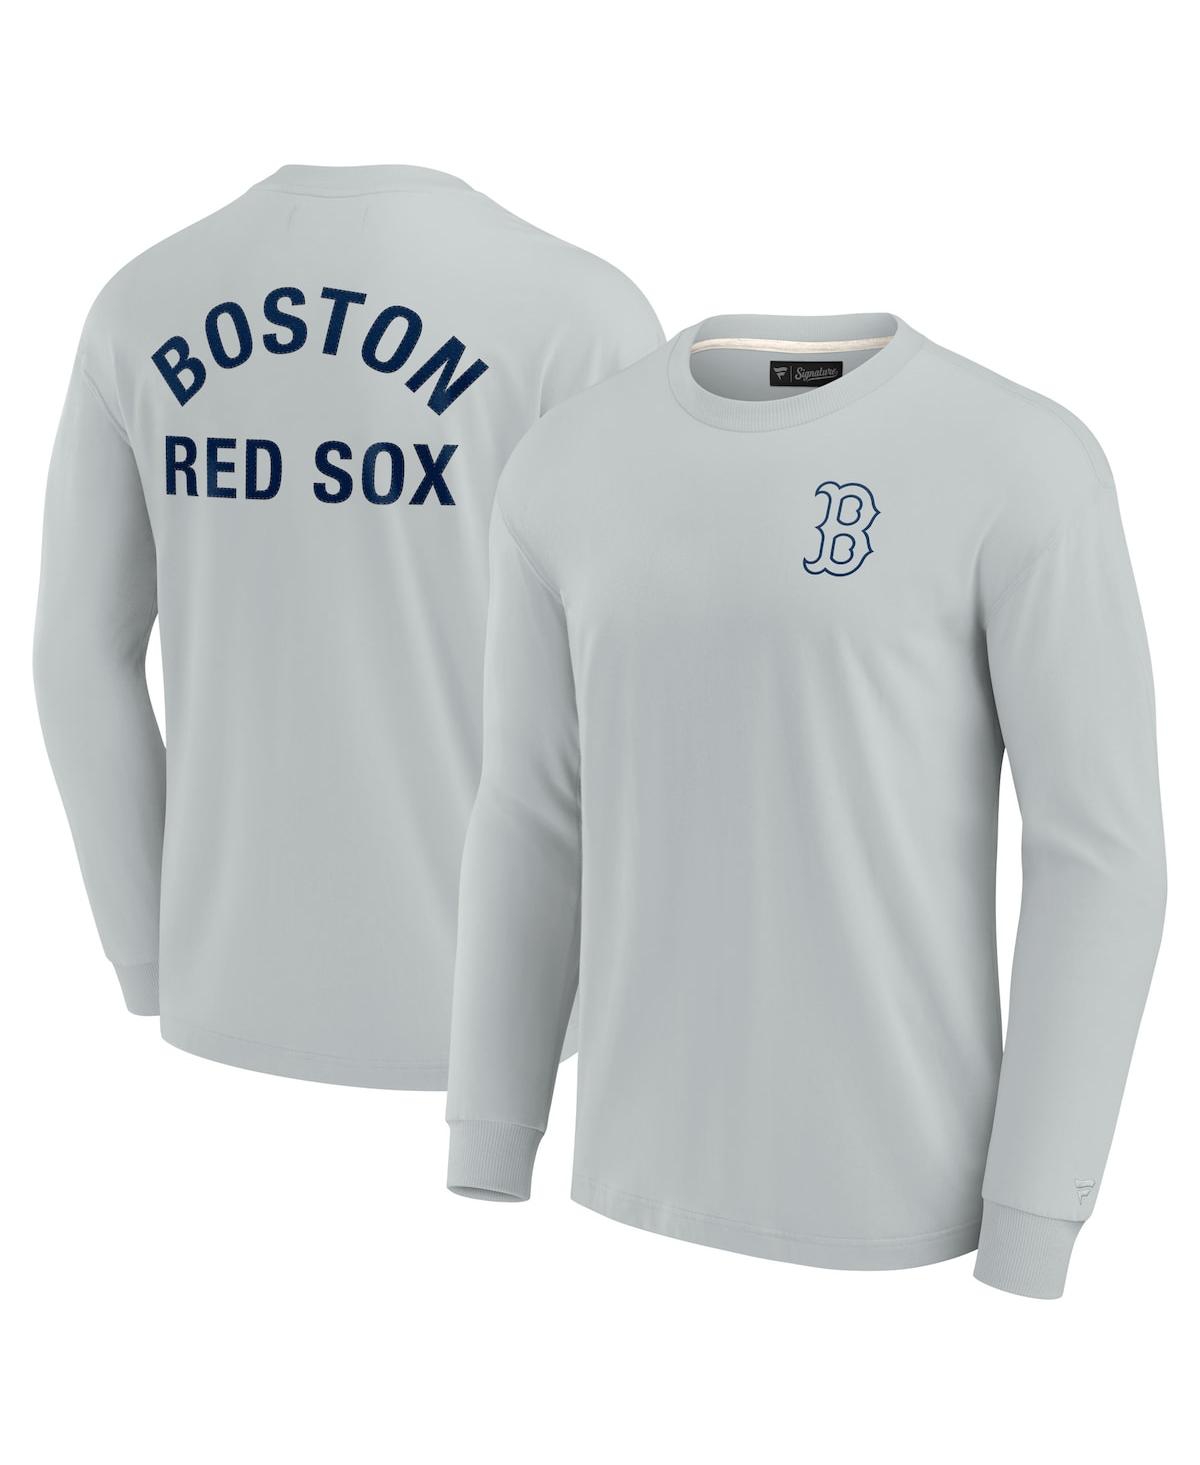 Men's and Women's Fanatics Signature Gray Boston Red Sox Super Soft Long Sleeve T-shirt - Gray